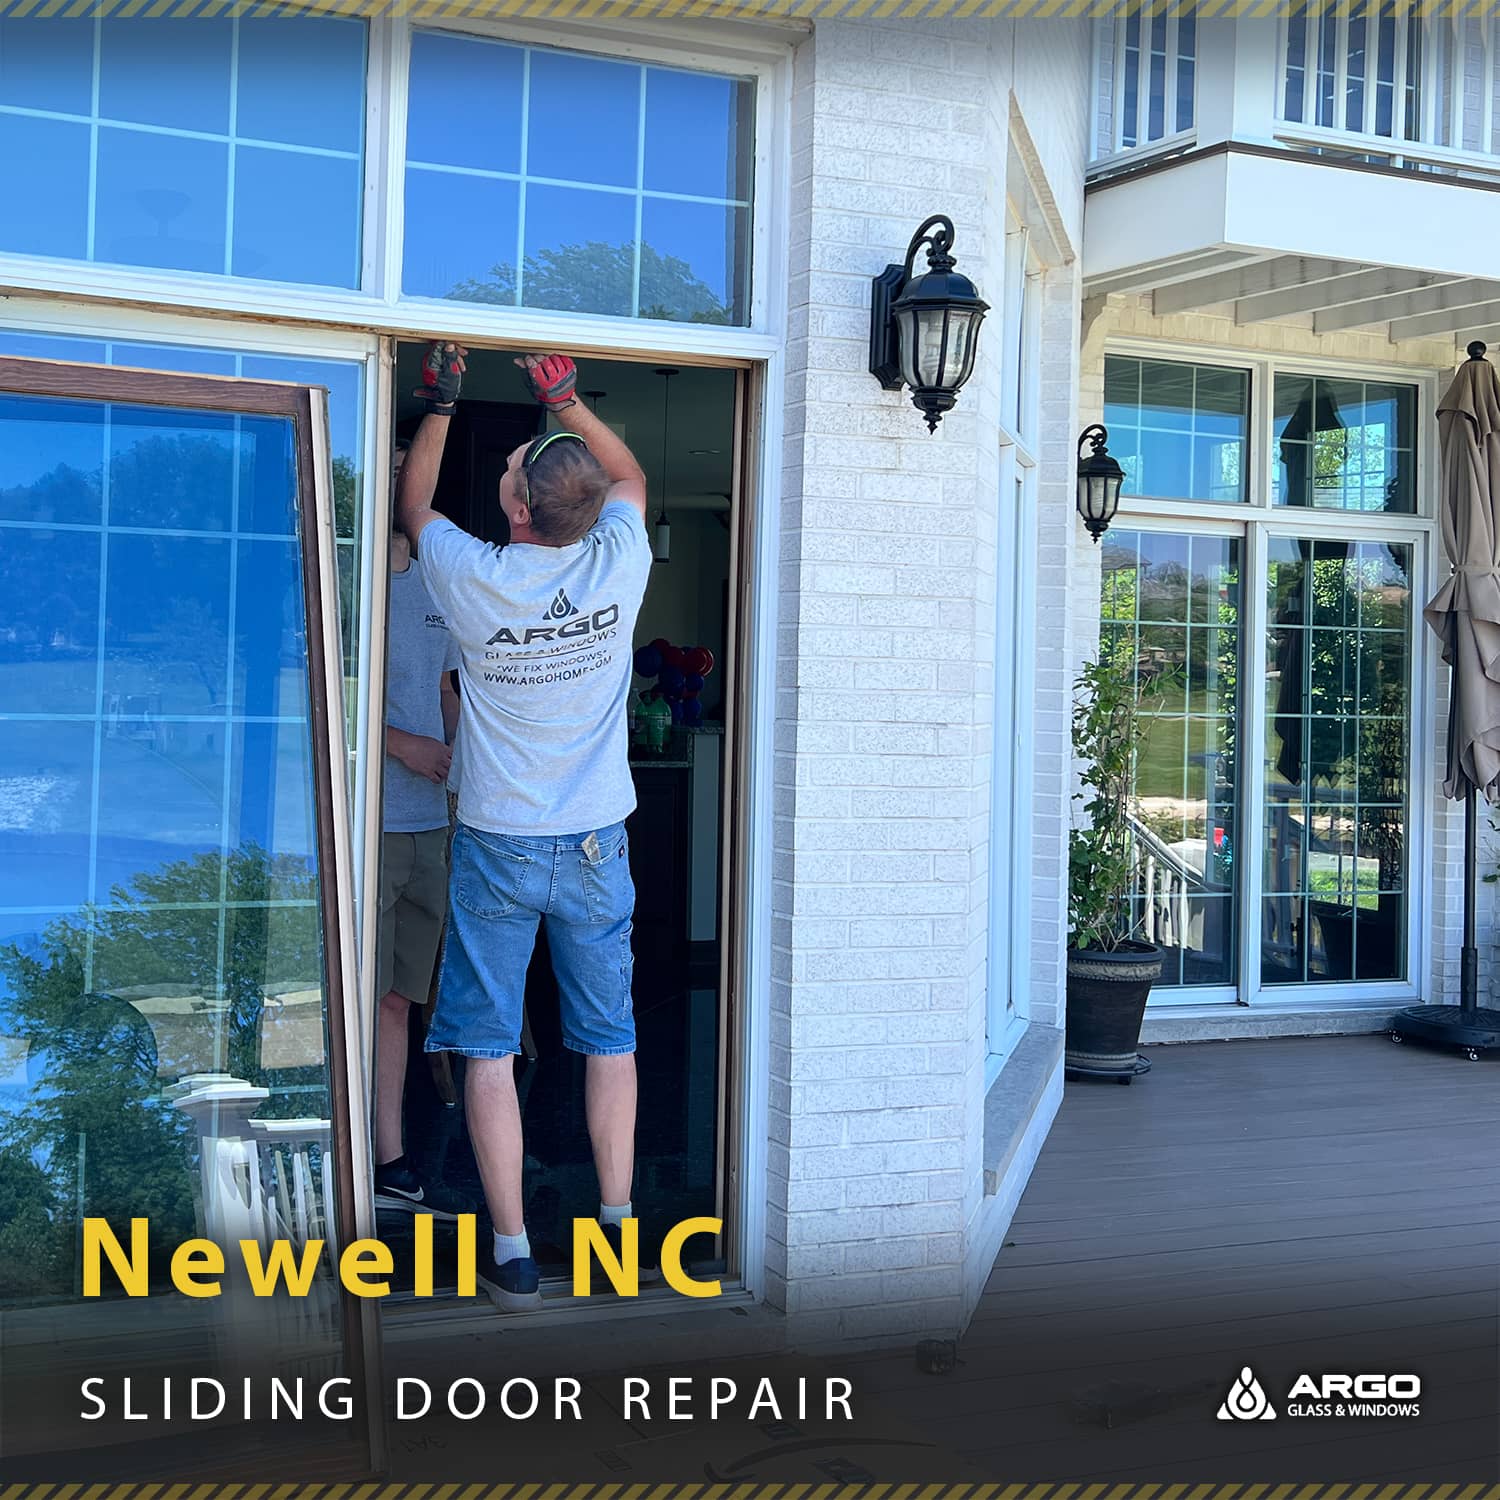 Professional Sliding Door Repair company